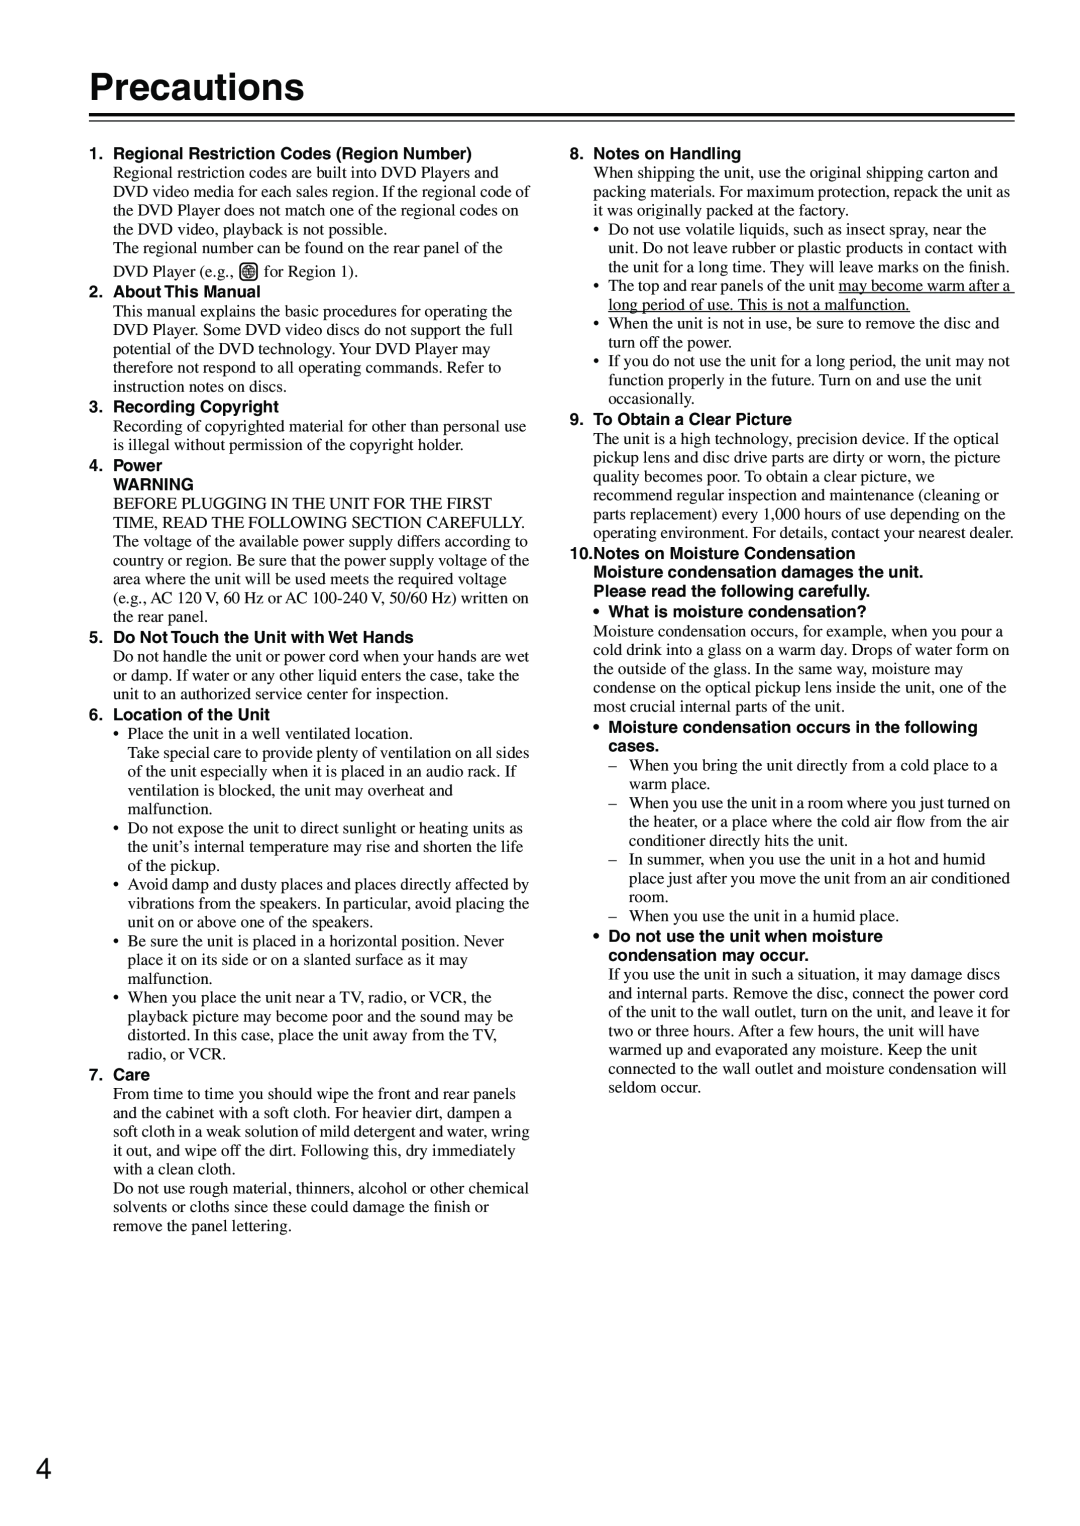 Onkyo DV-SP302 instruction manual Precautions 